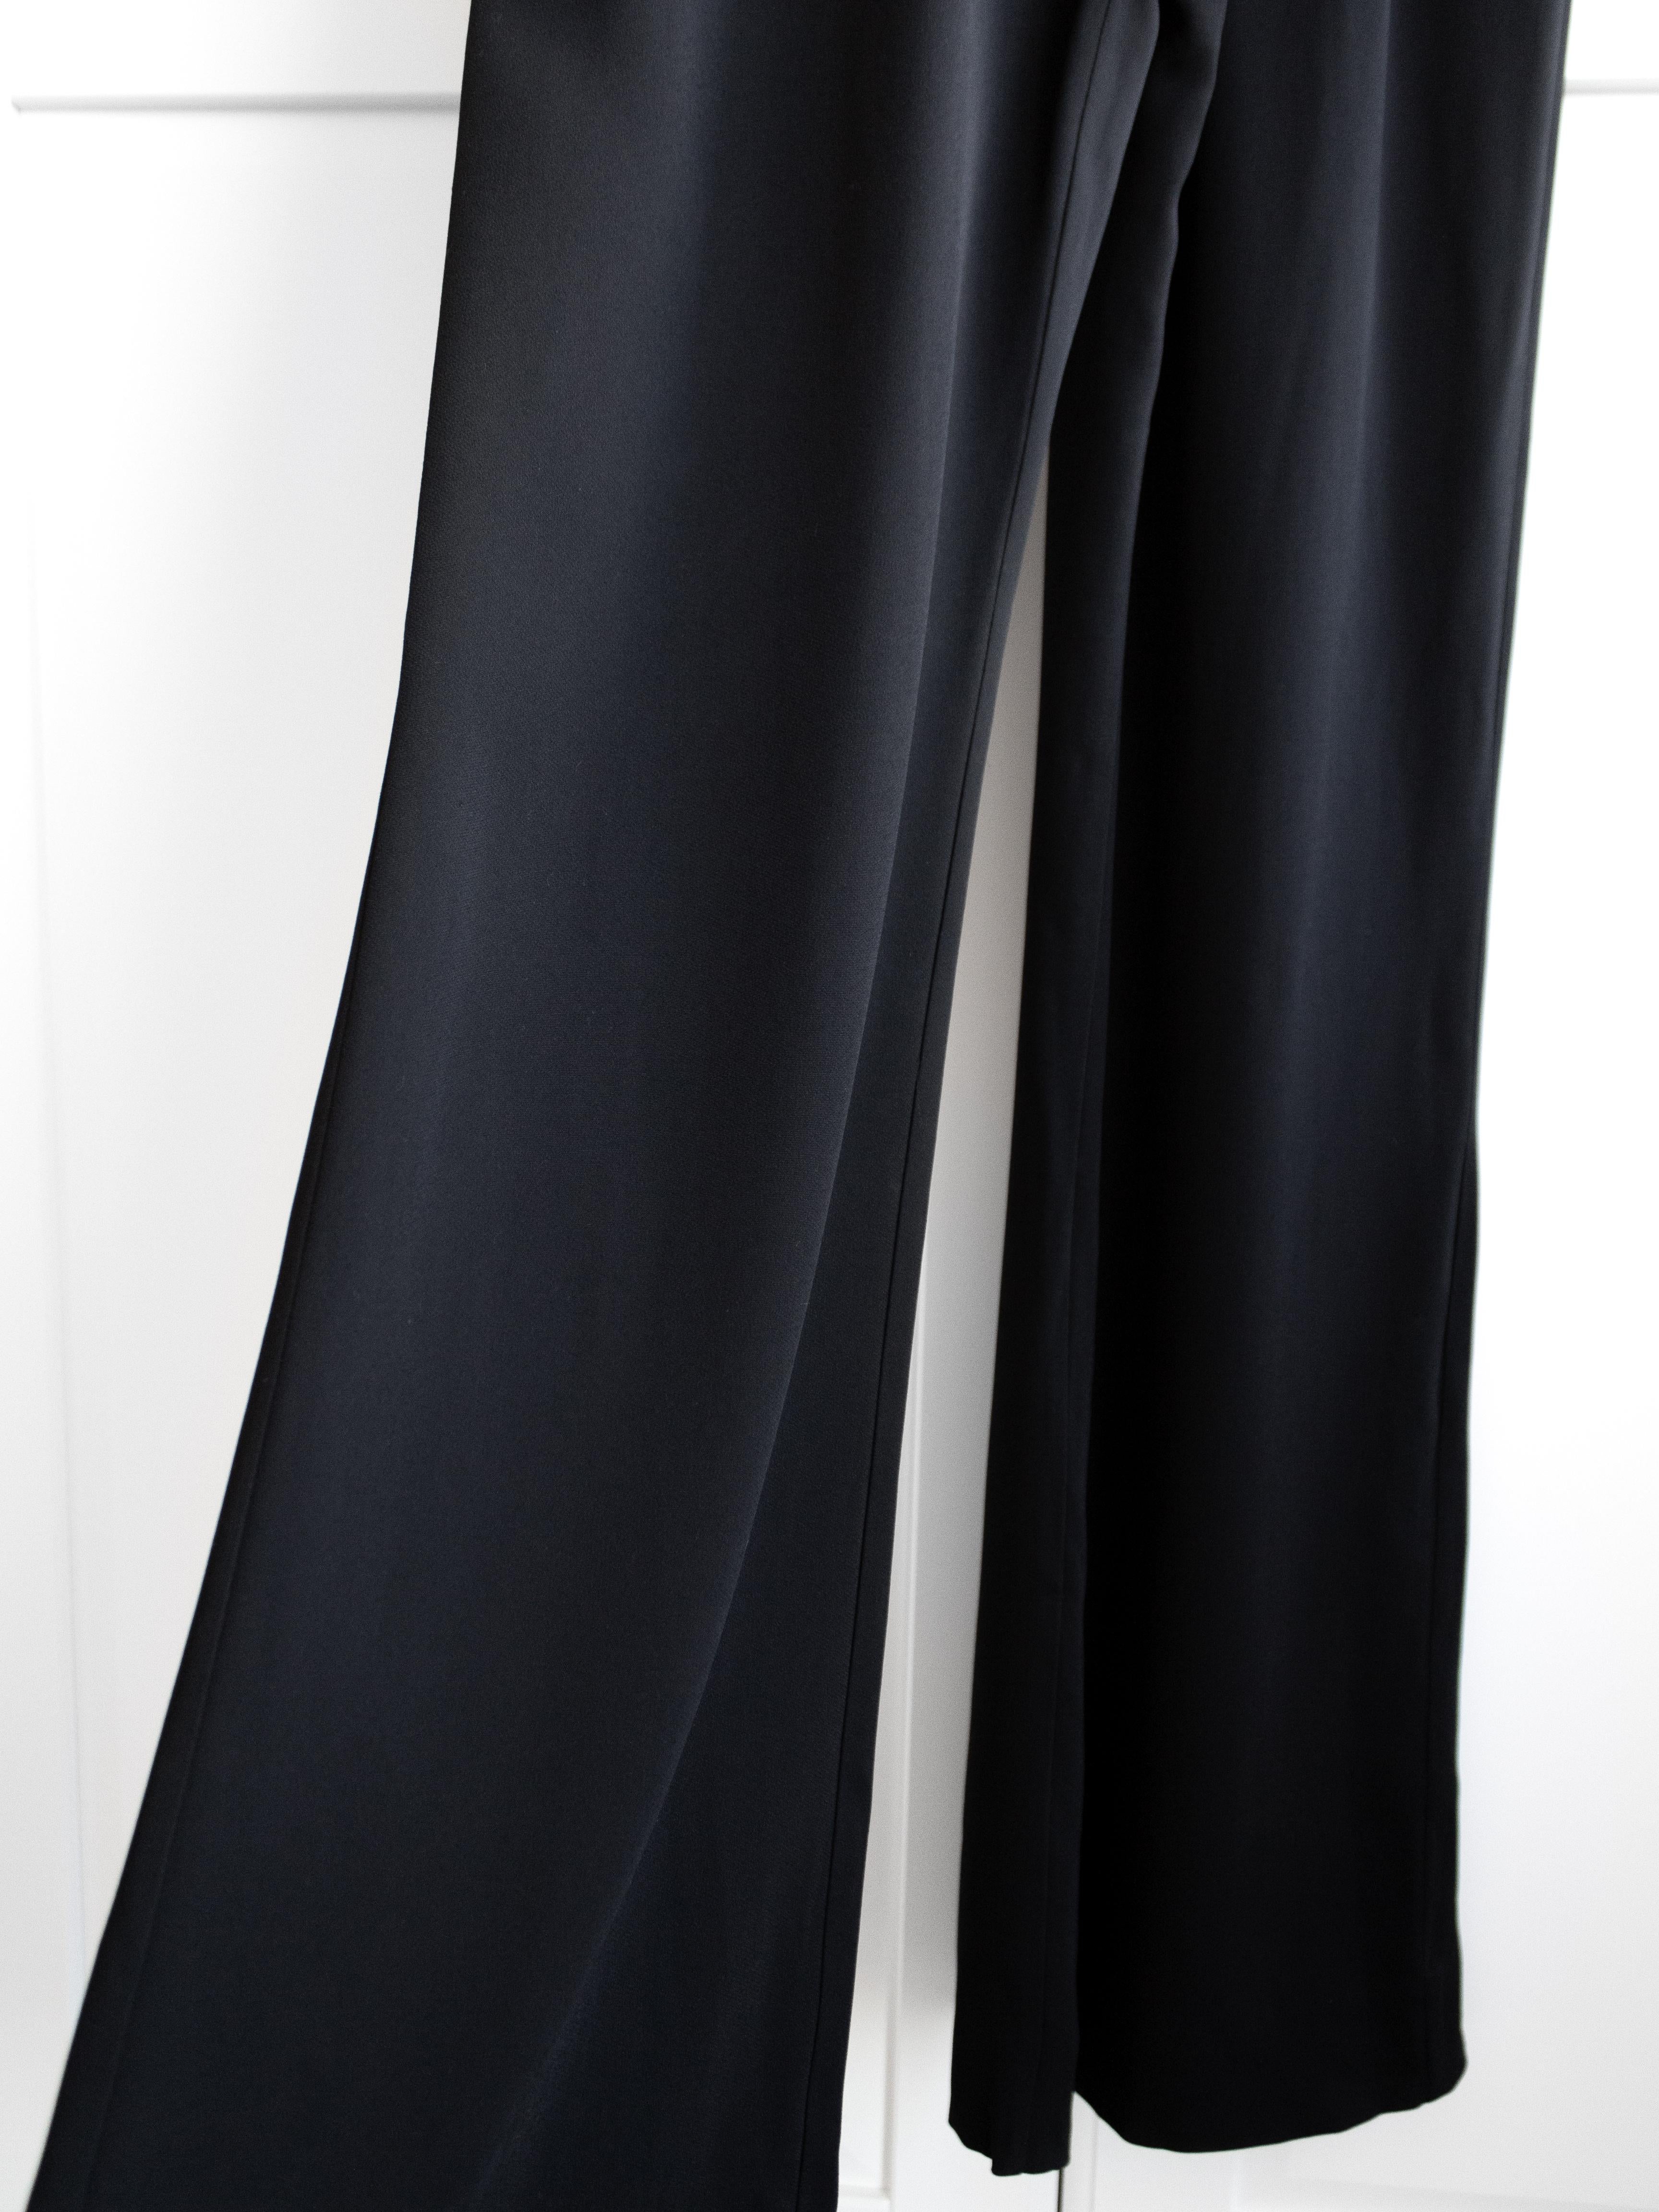 Zuhair Murad Black Lace Embellished Jumpsuit For Sale 6